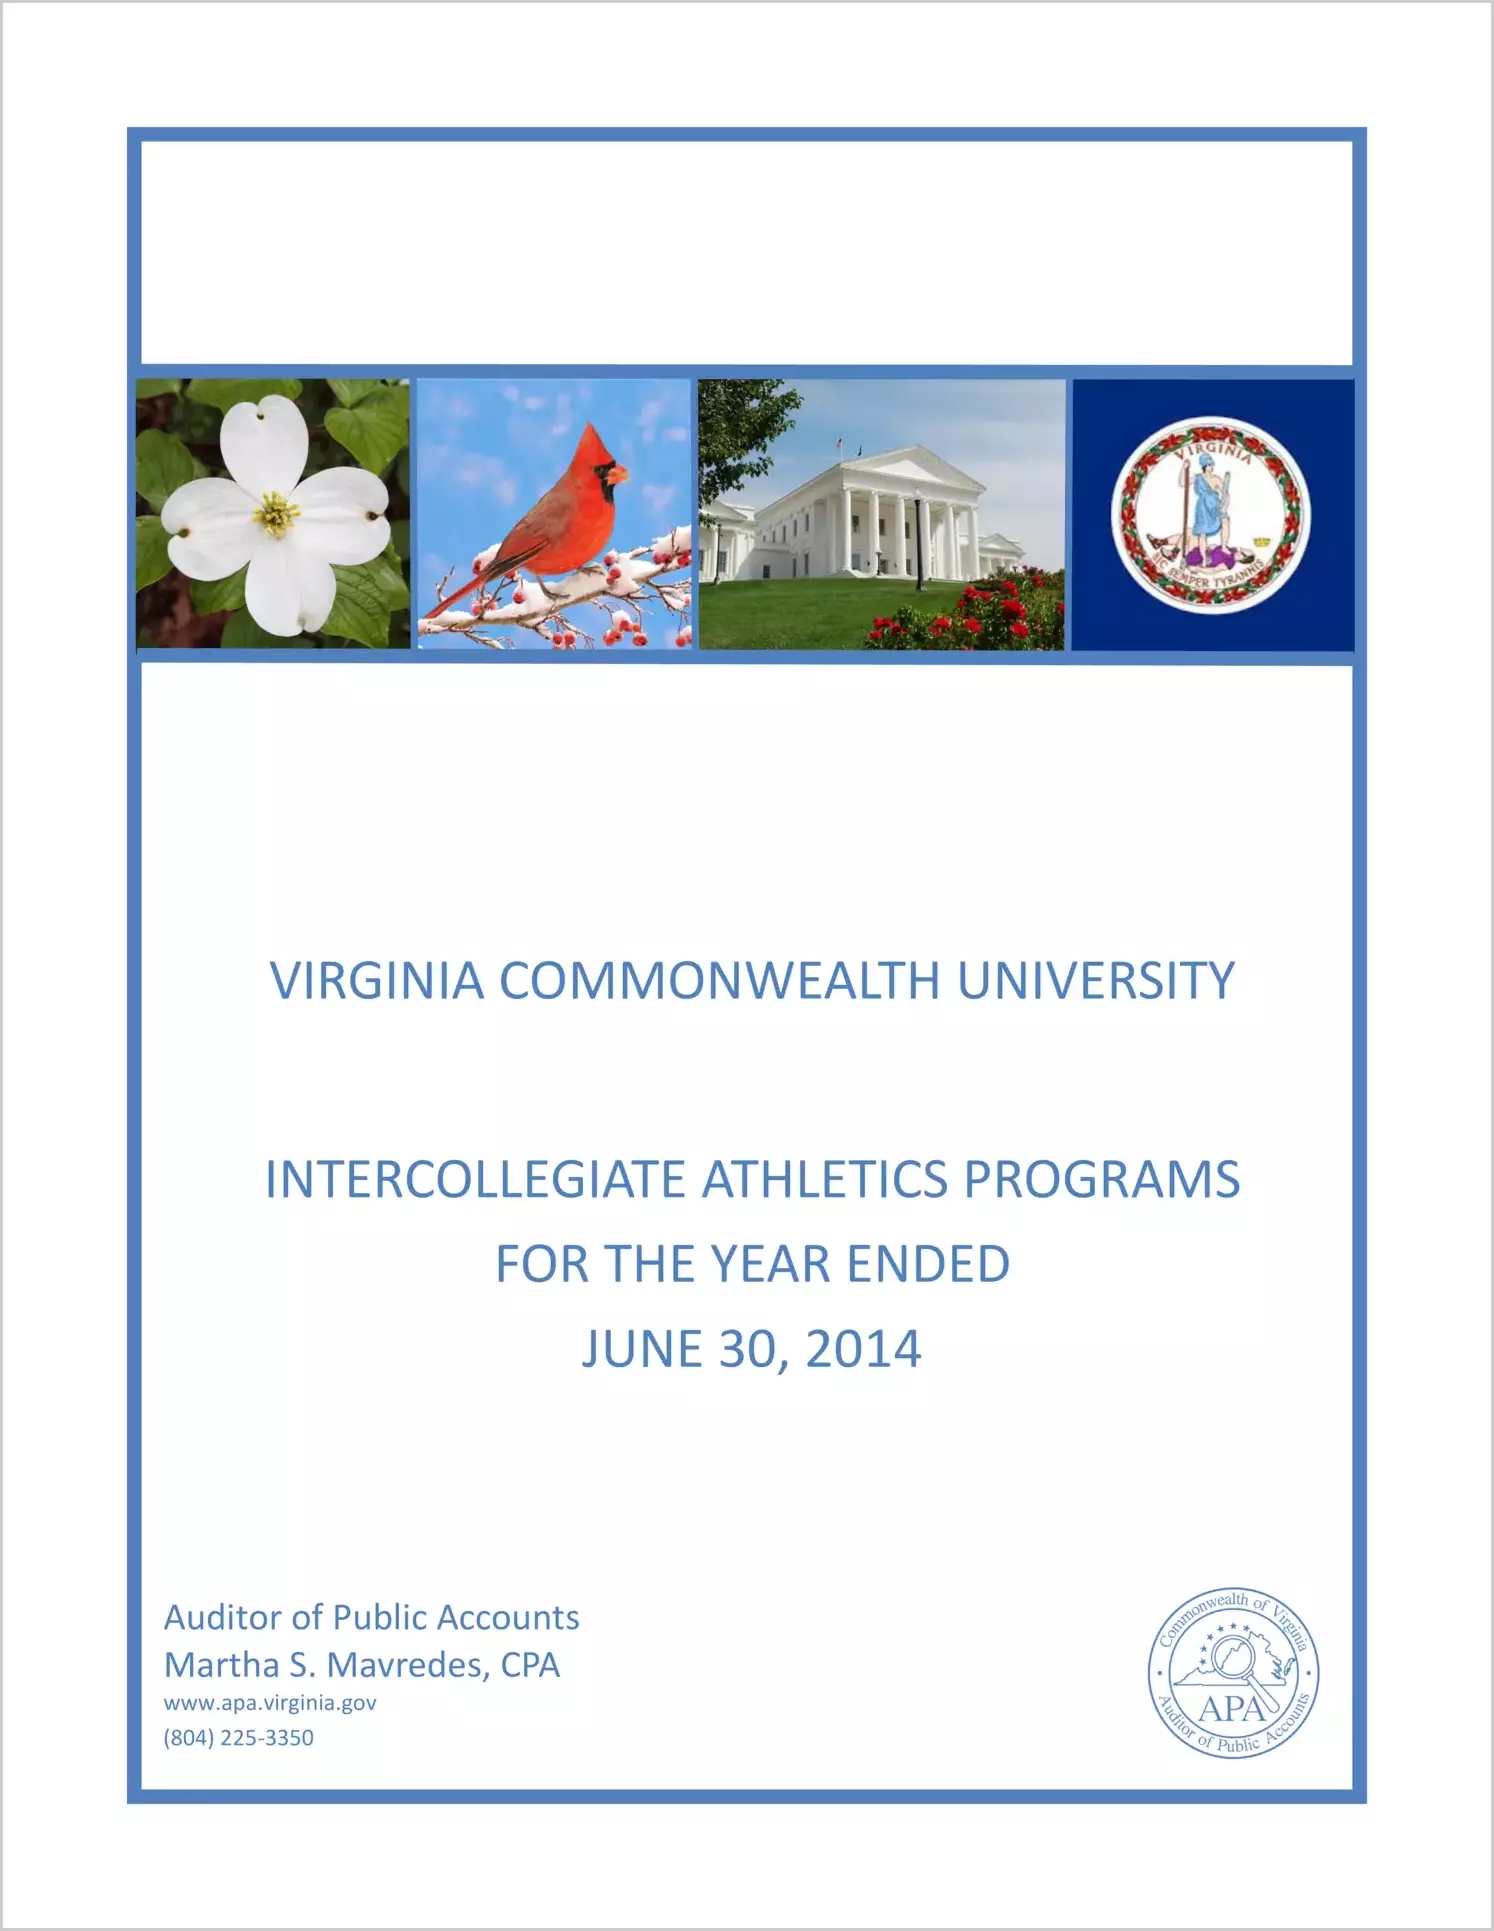 Virginia Commonwealth University Intercollegiate Athletics Programs for the year ended June 30, 2014